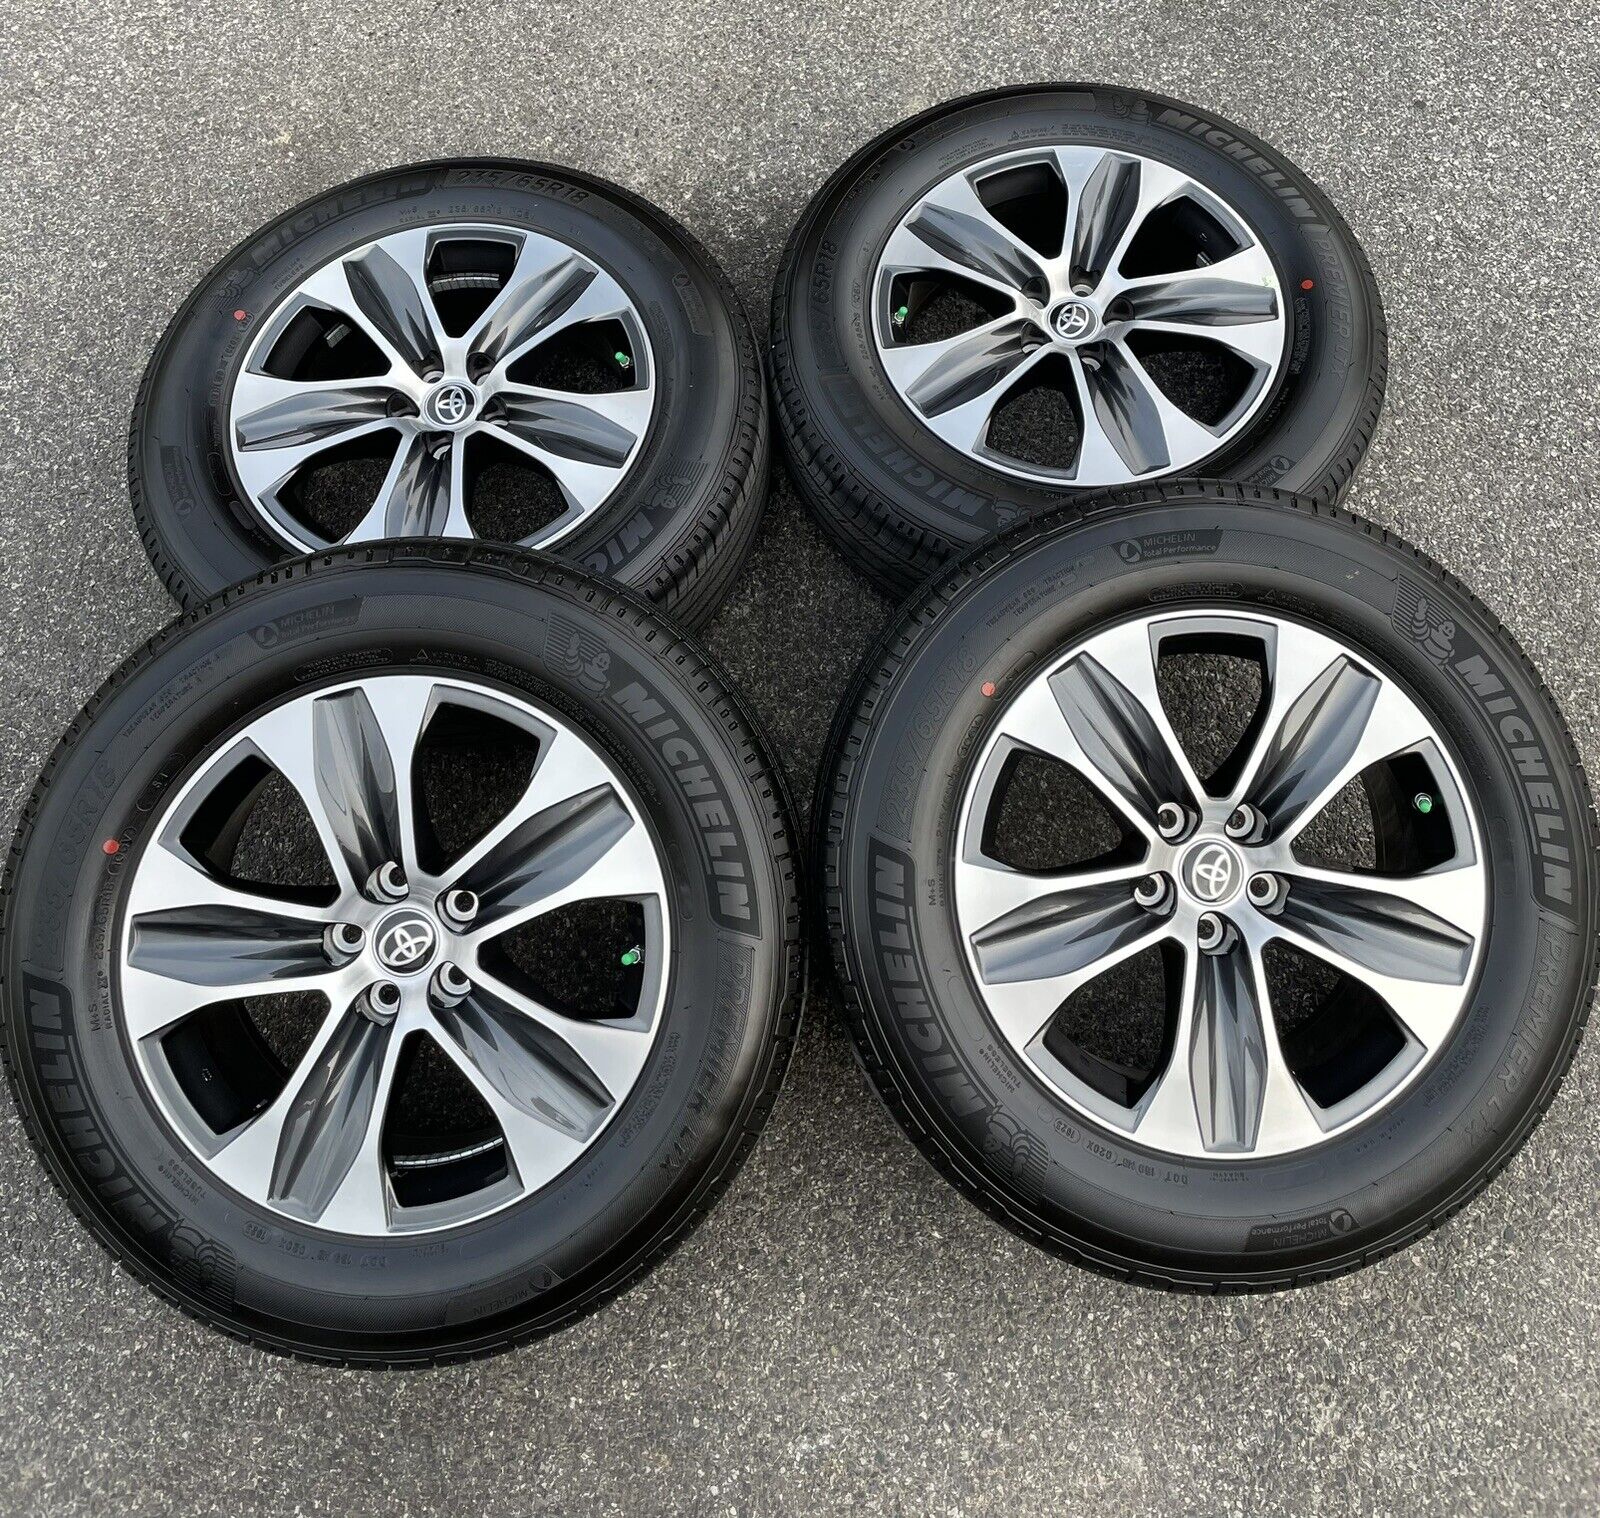 New 2023 Toyota Highlander 18” Wheels Rims Tires 235/65/18 OEM 2022 2021 RAV4